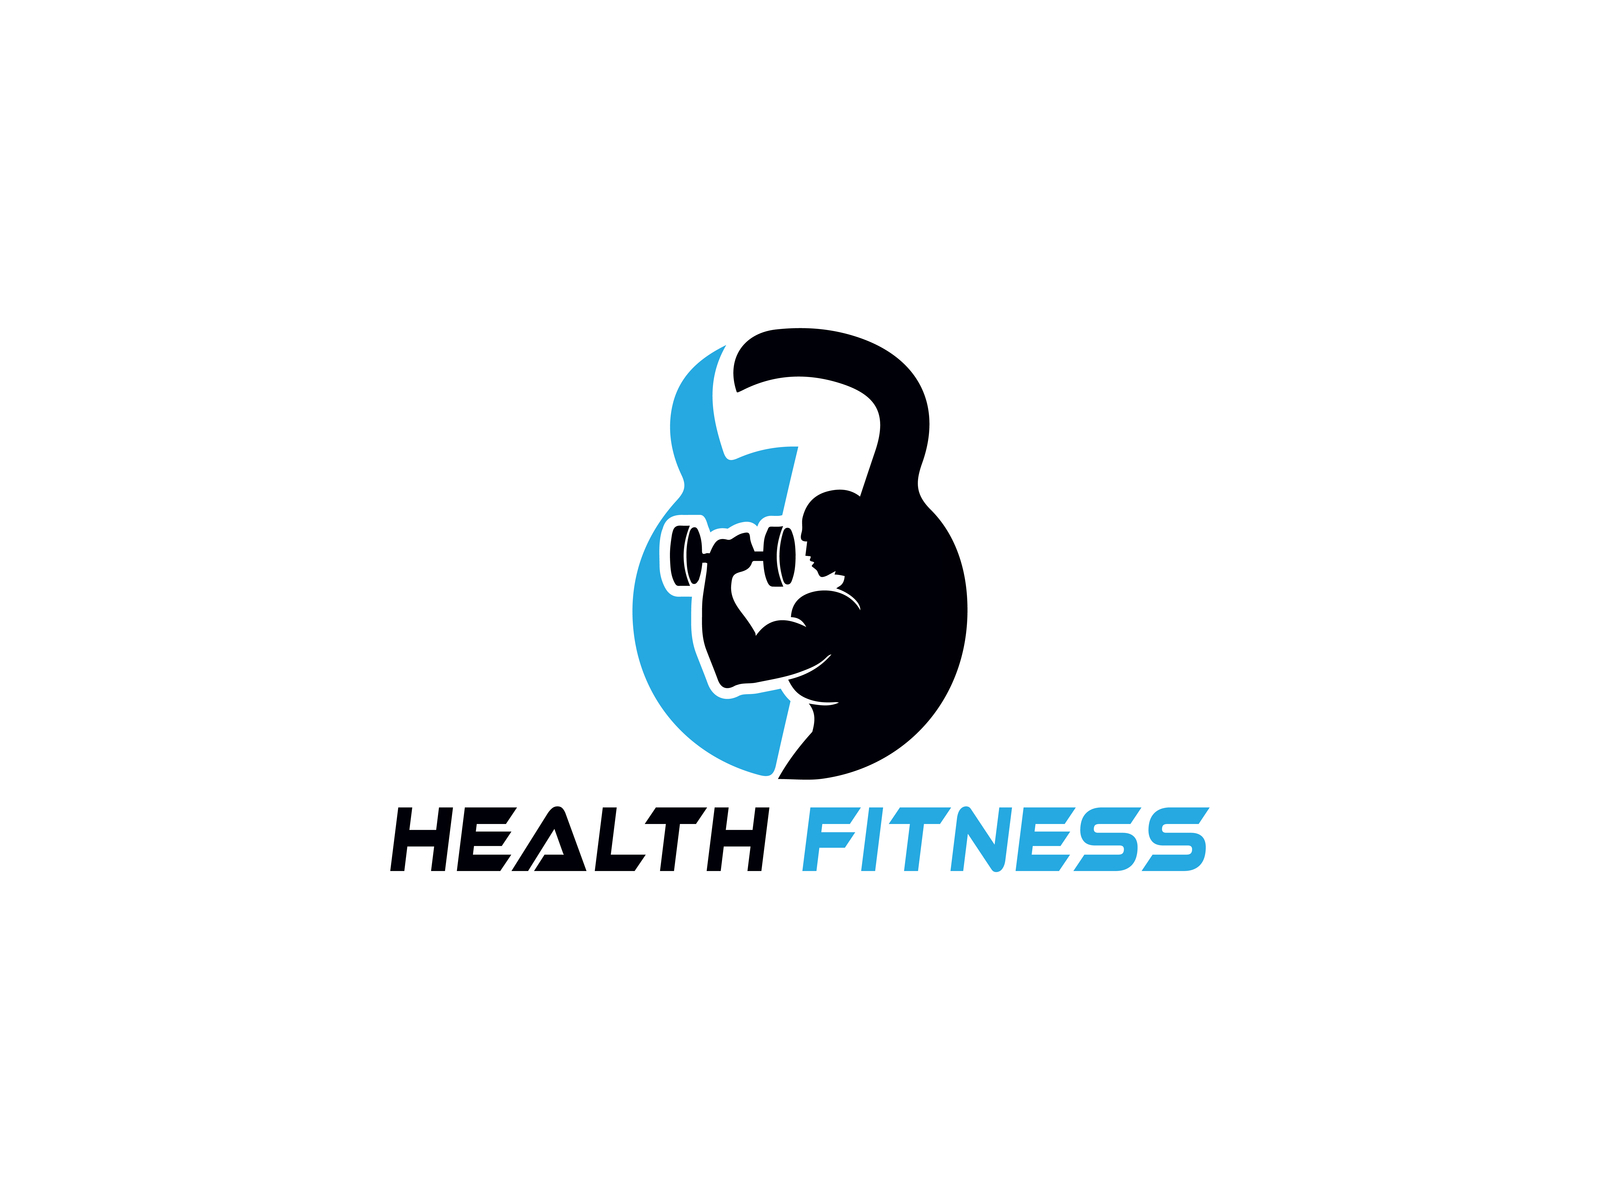 Download Health Fitness Logo By Md Ishrafil Islam On Dribbble